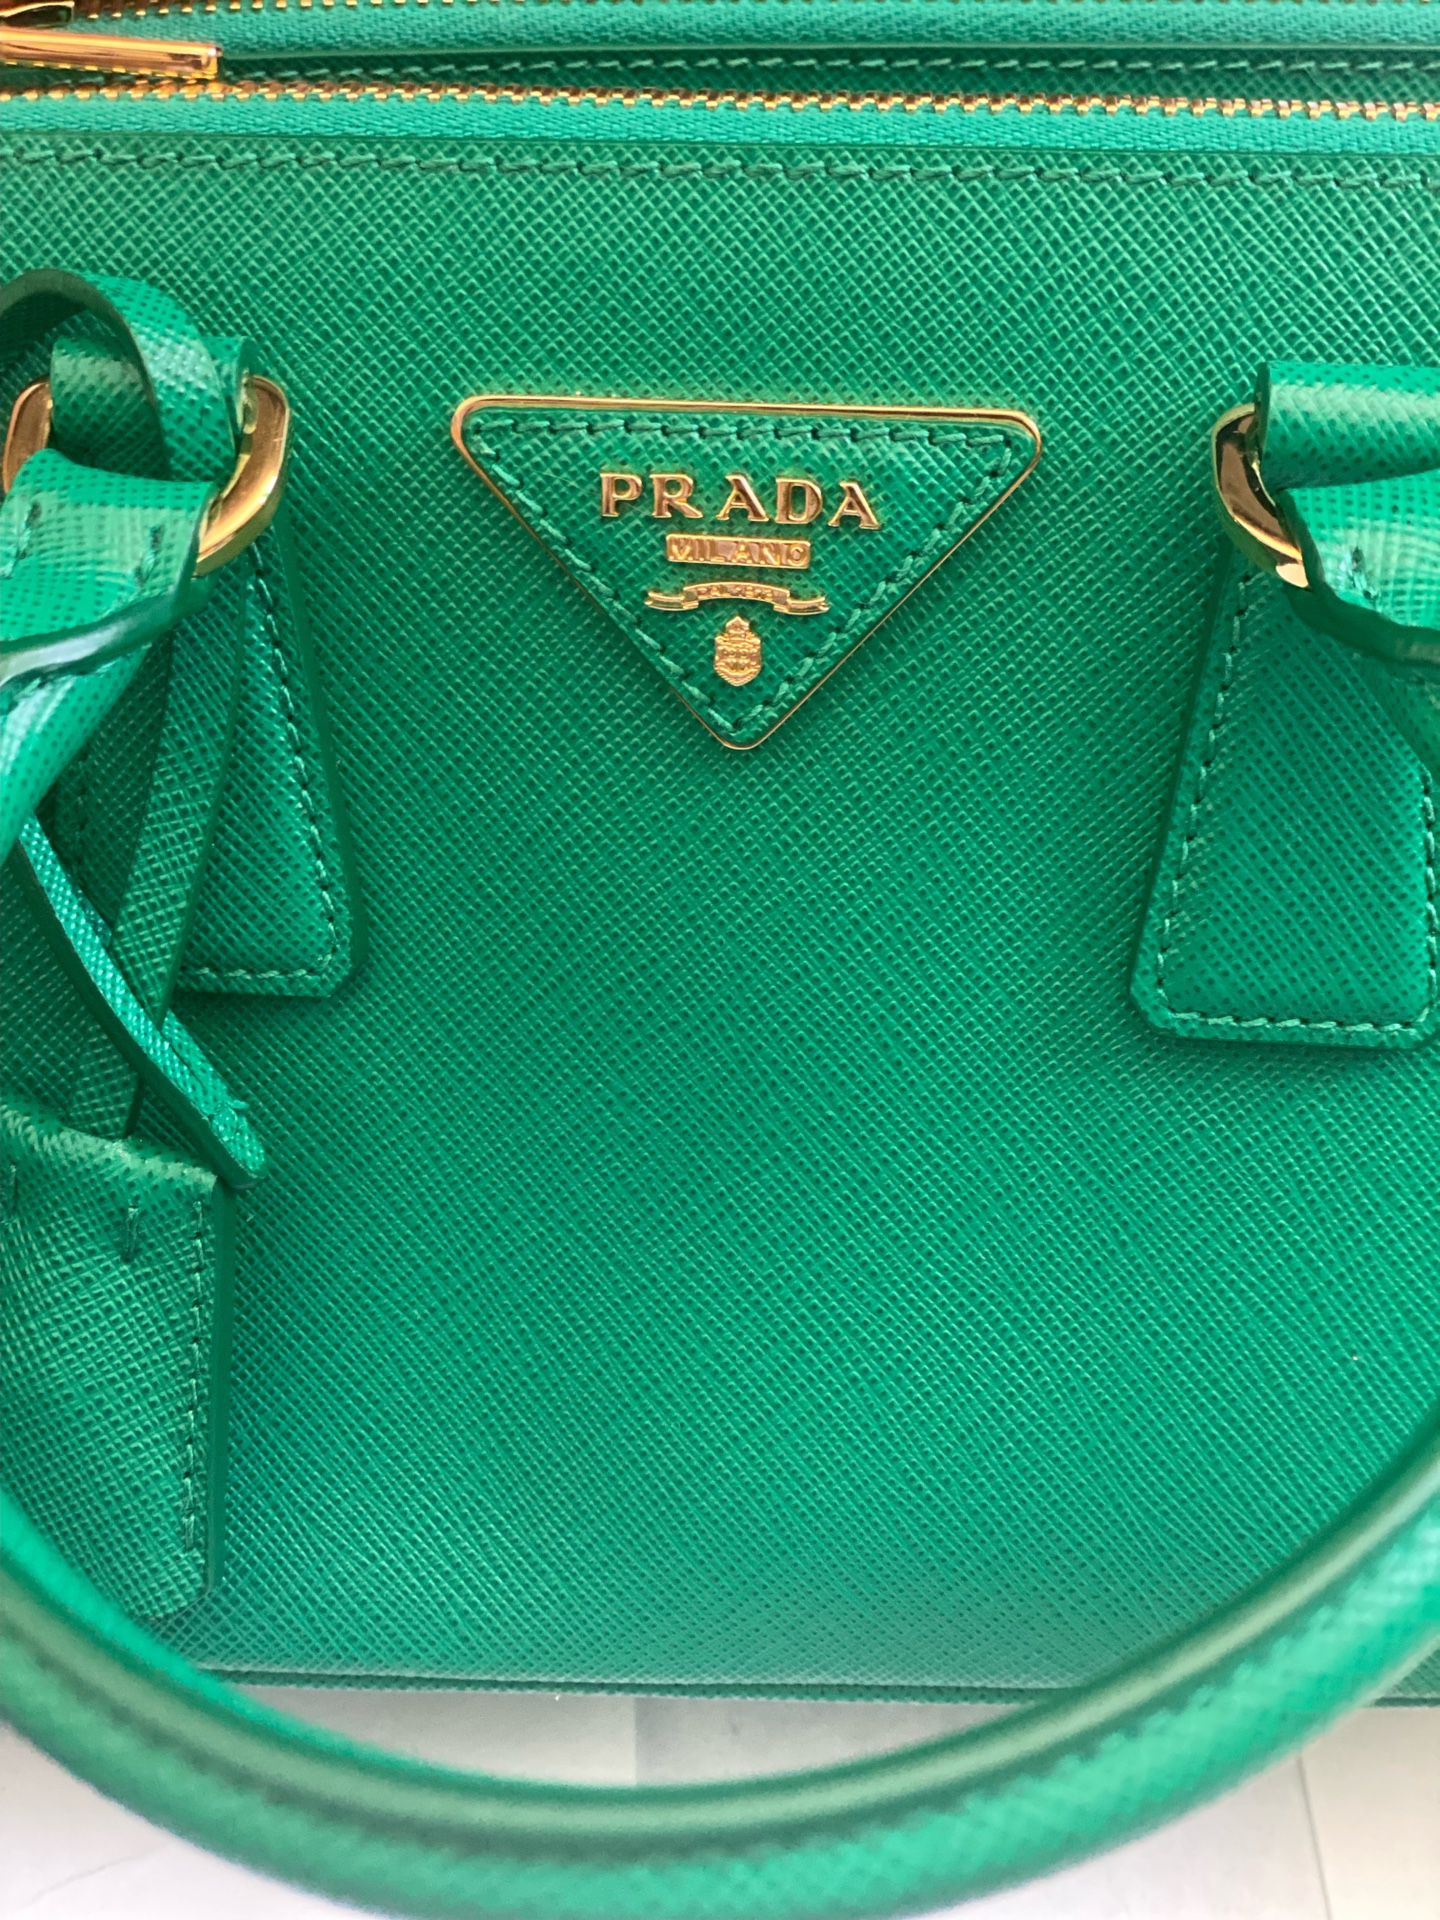 Prada Leather Mini Brown Bag for Sale in San Jose, CA - OfferUp